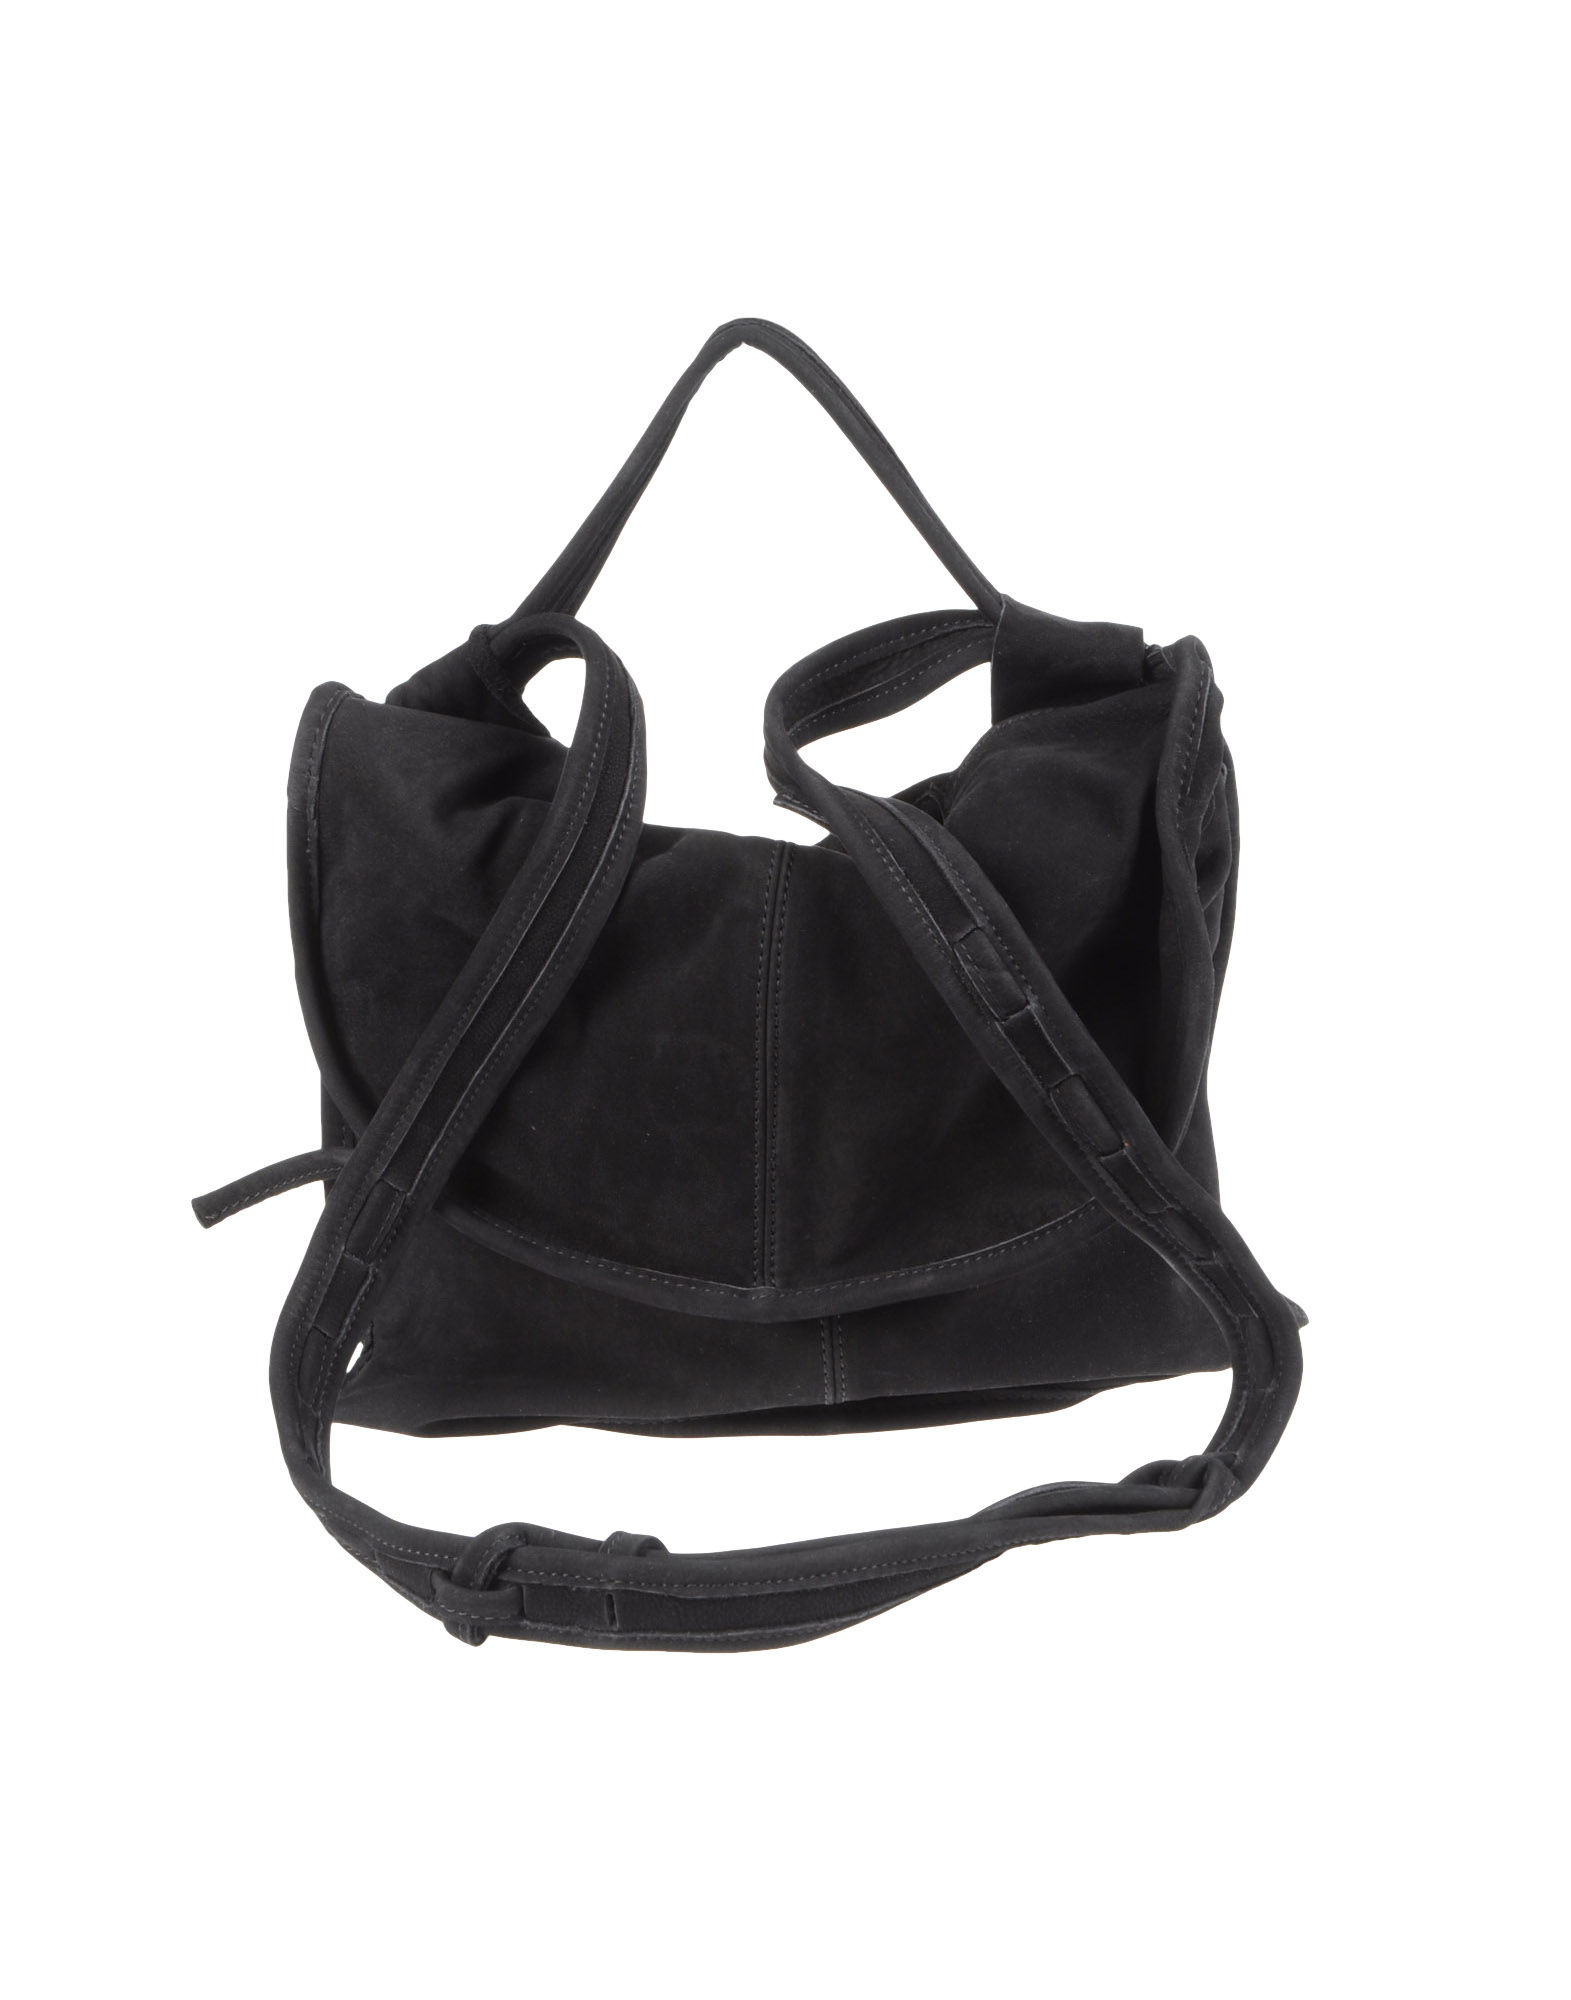 Silent - Damir Doma Large Leather Bag in Black | Lyst